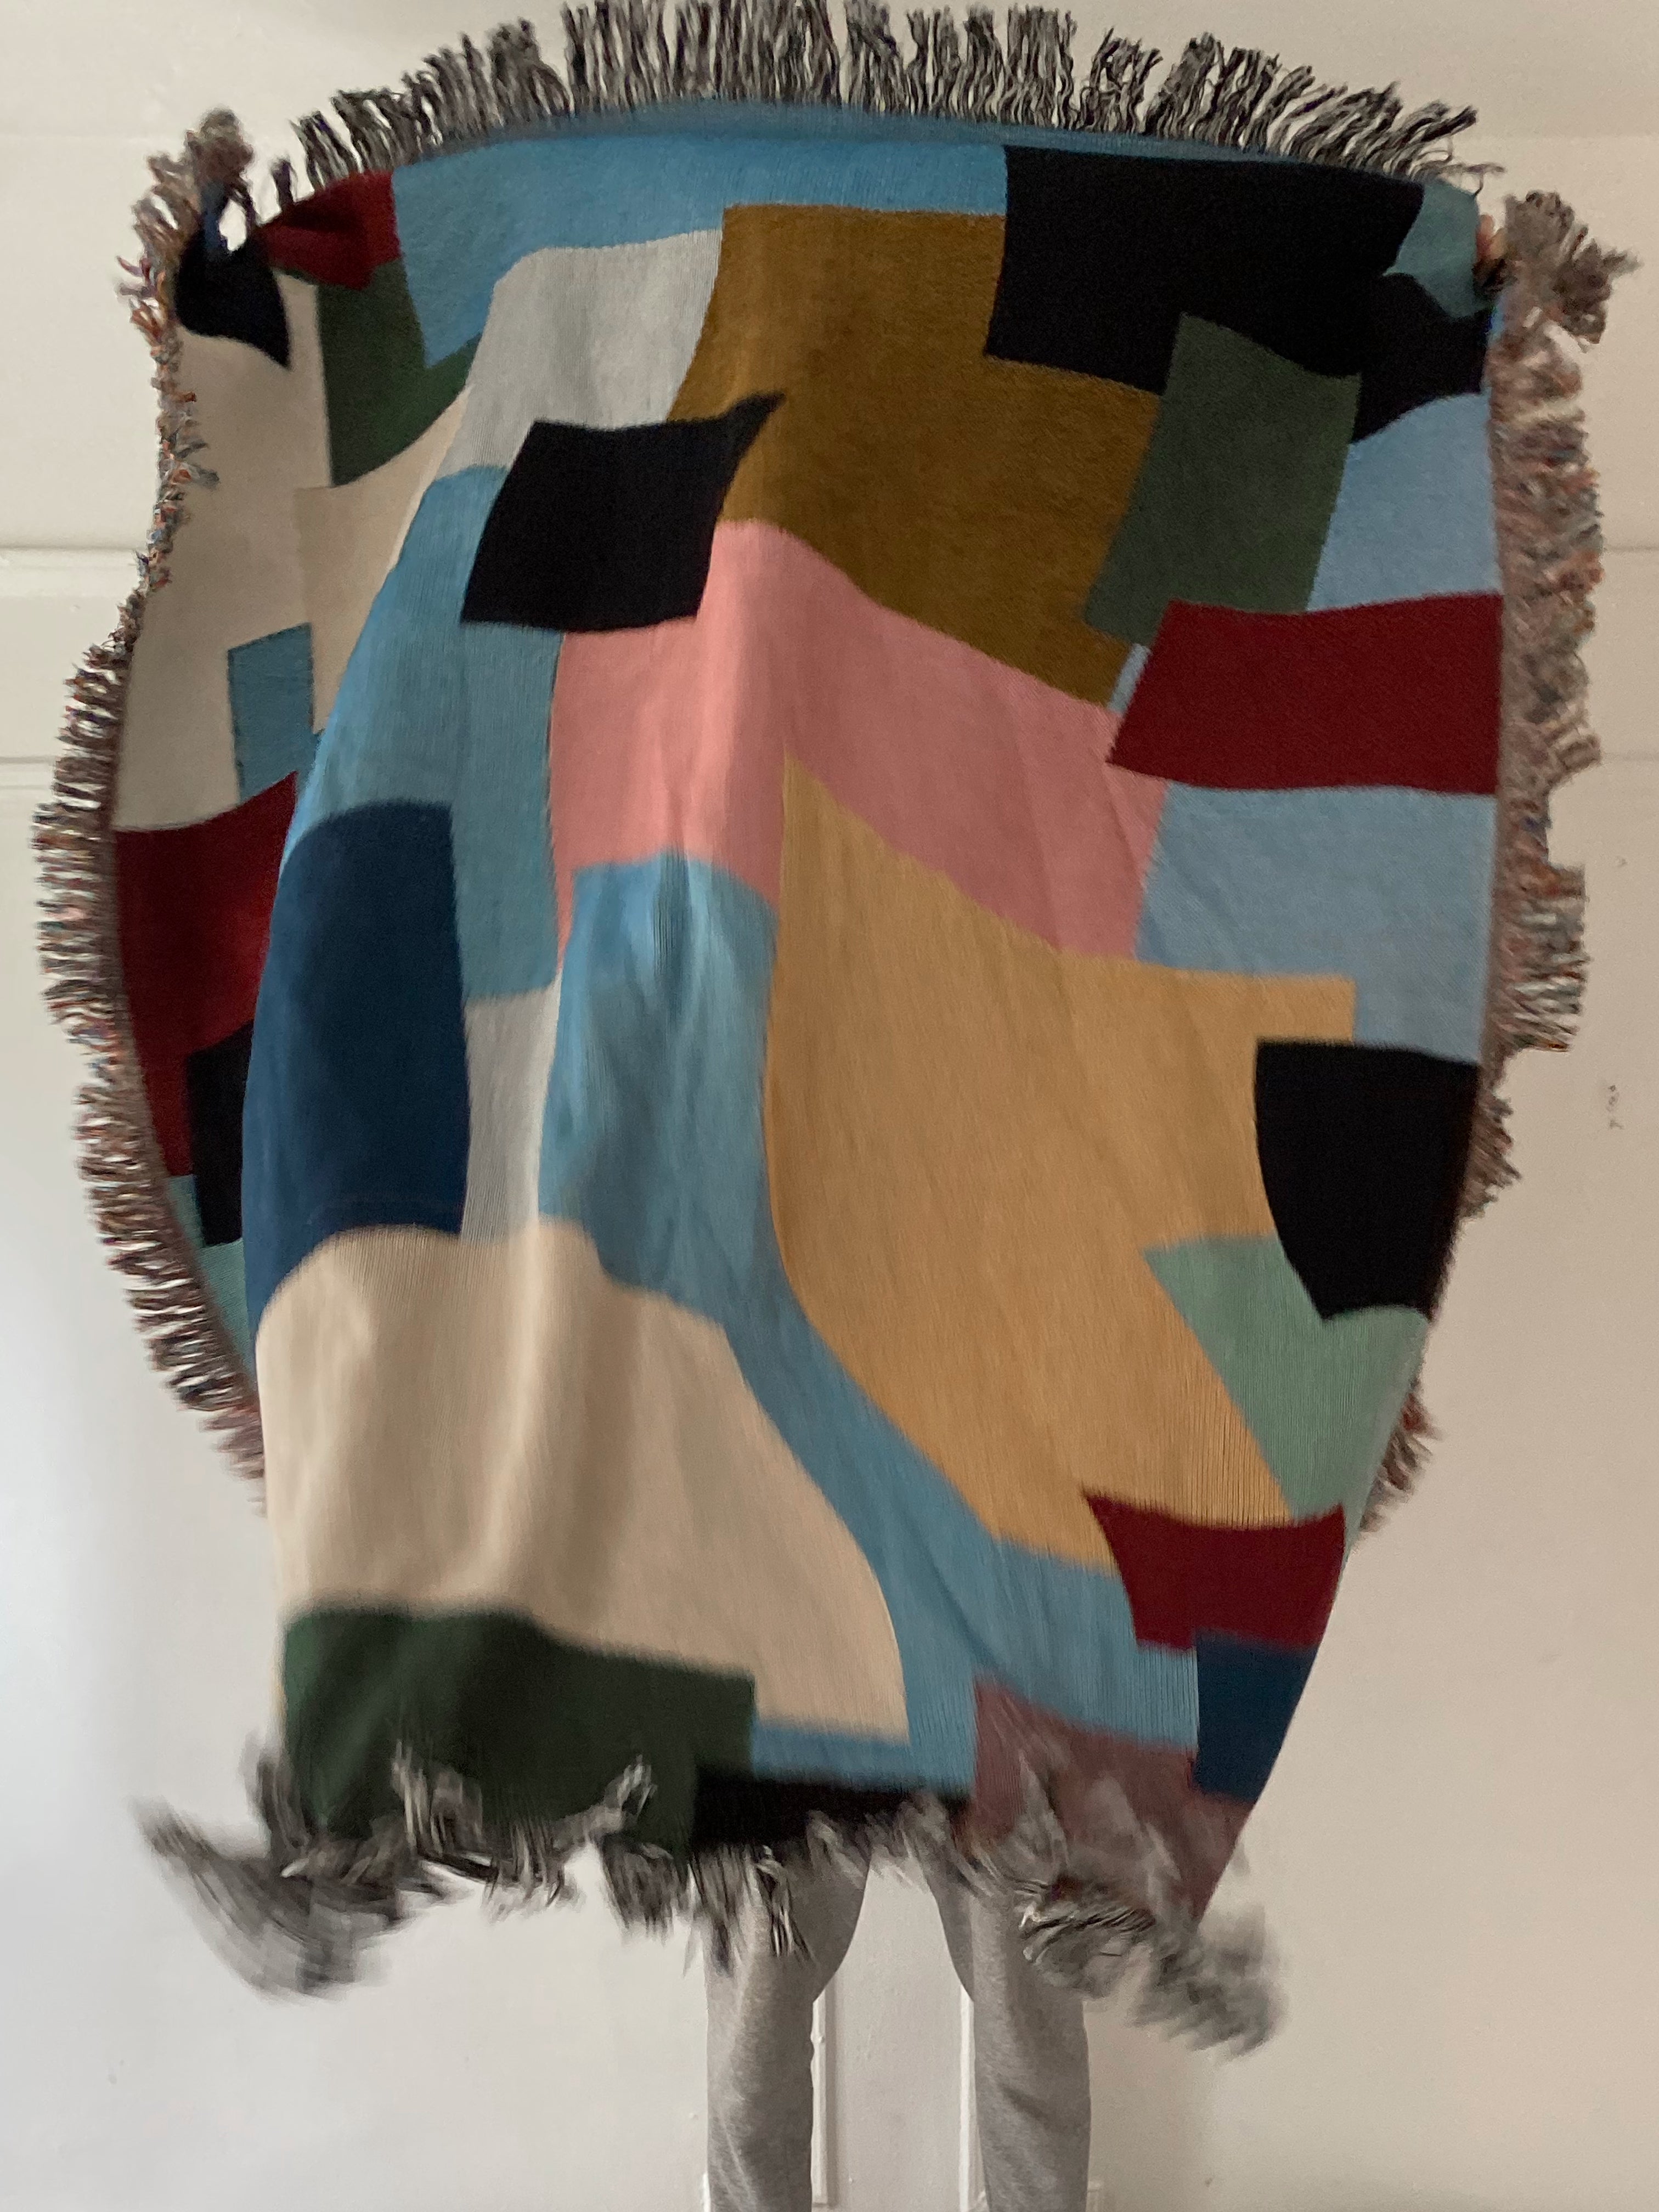 Patchwork Woven Throw Blanket – Clr Shop